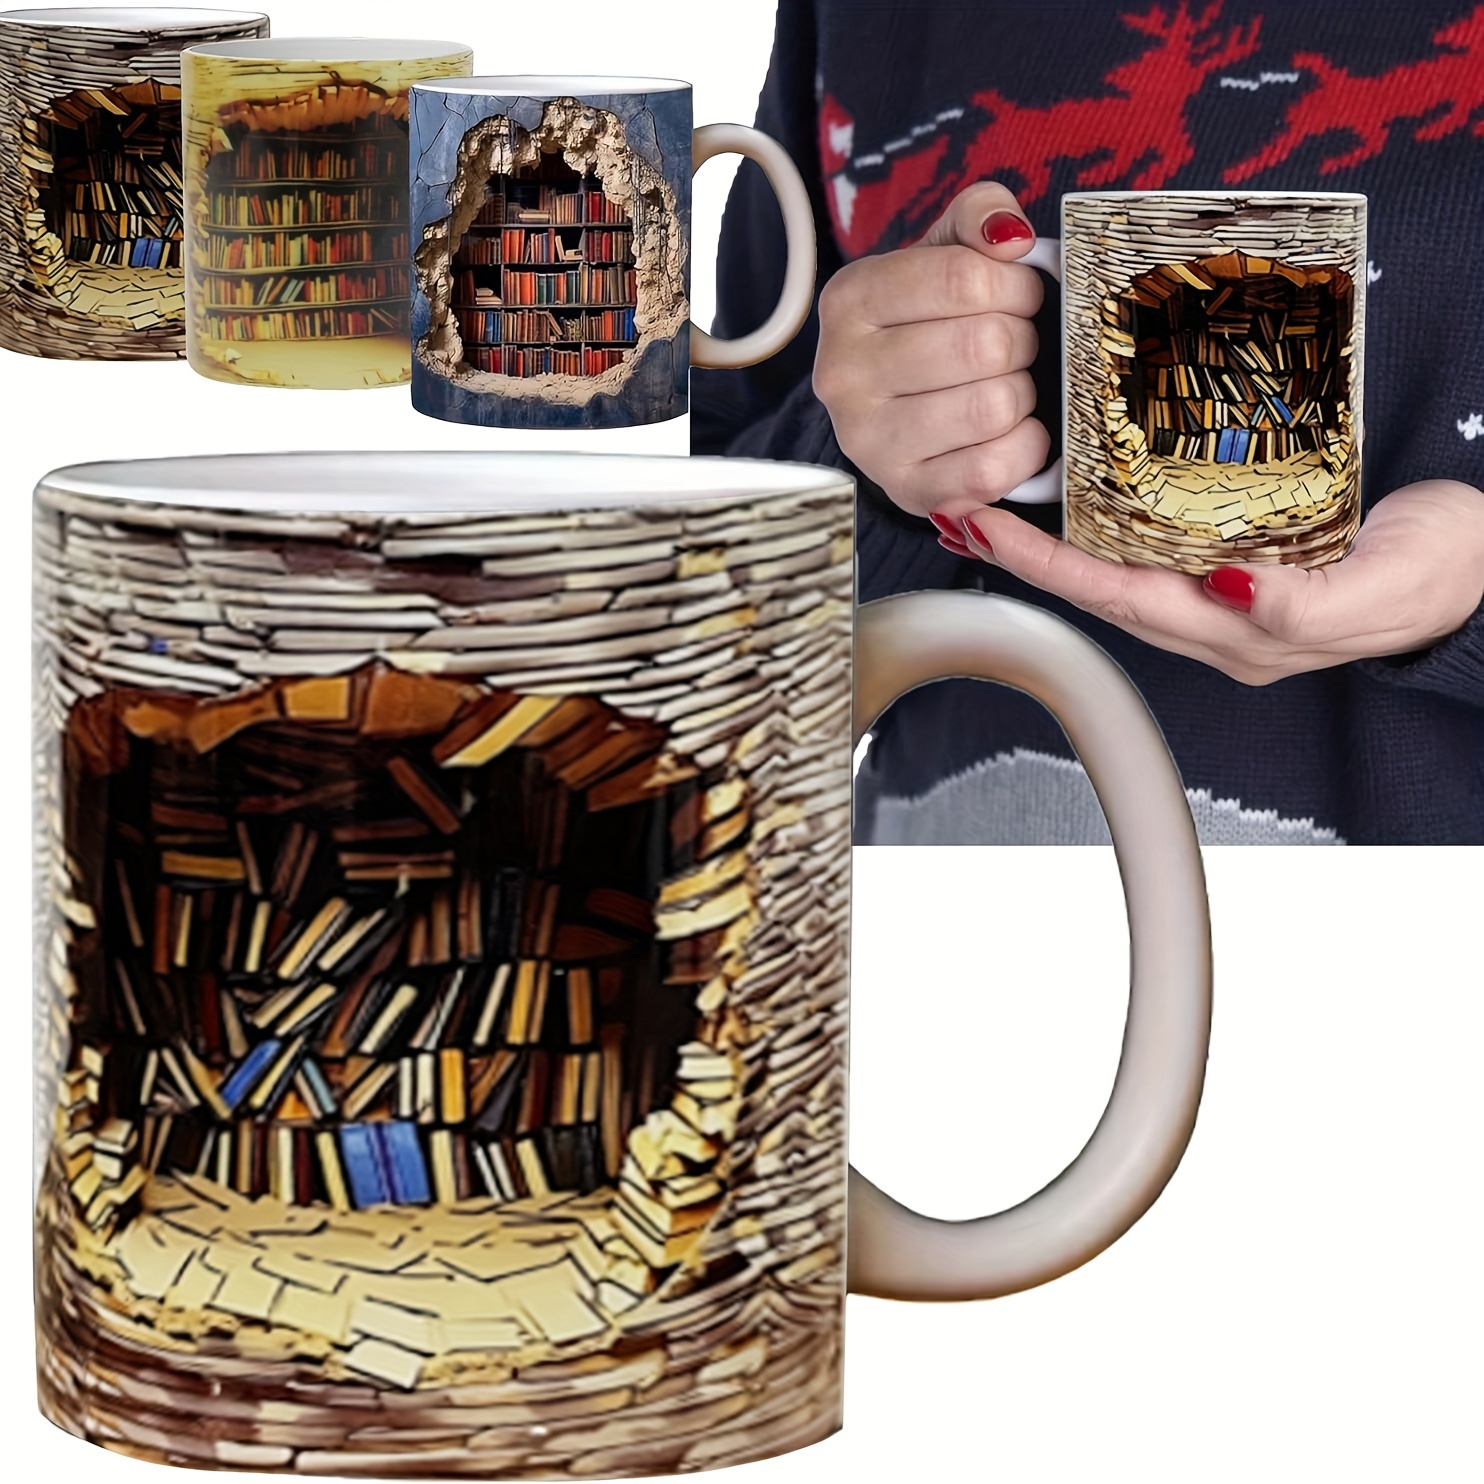 3D Bookshelf Mug -Bookworm Mug, 3d Bookshelf Coffee Mug, Book Coffee Mug,  Creative Space Design Ceramic Mugs, Book Lover Gift Birthday Christmas  Gifts